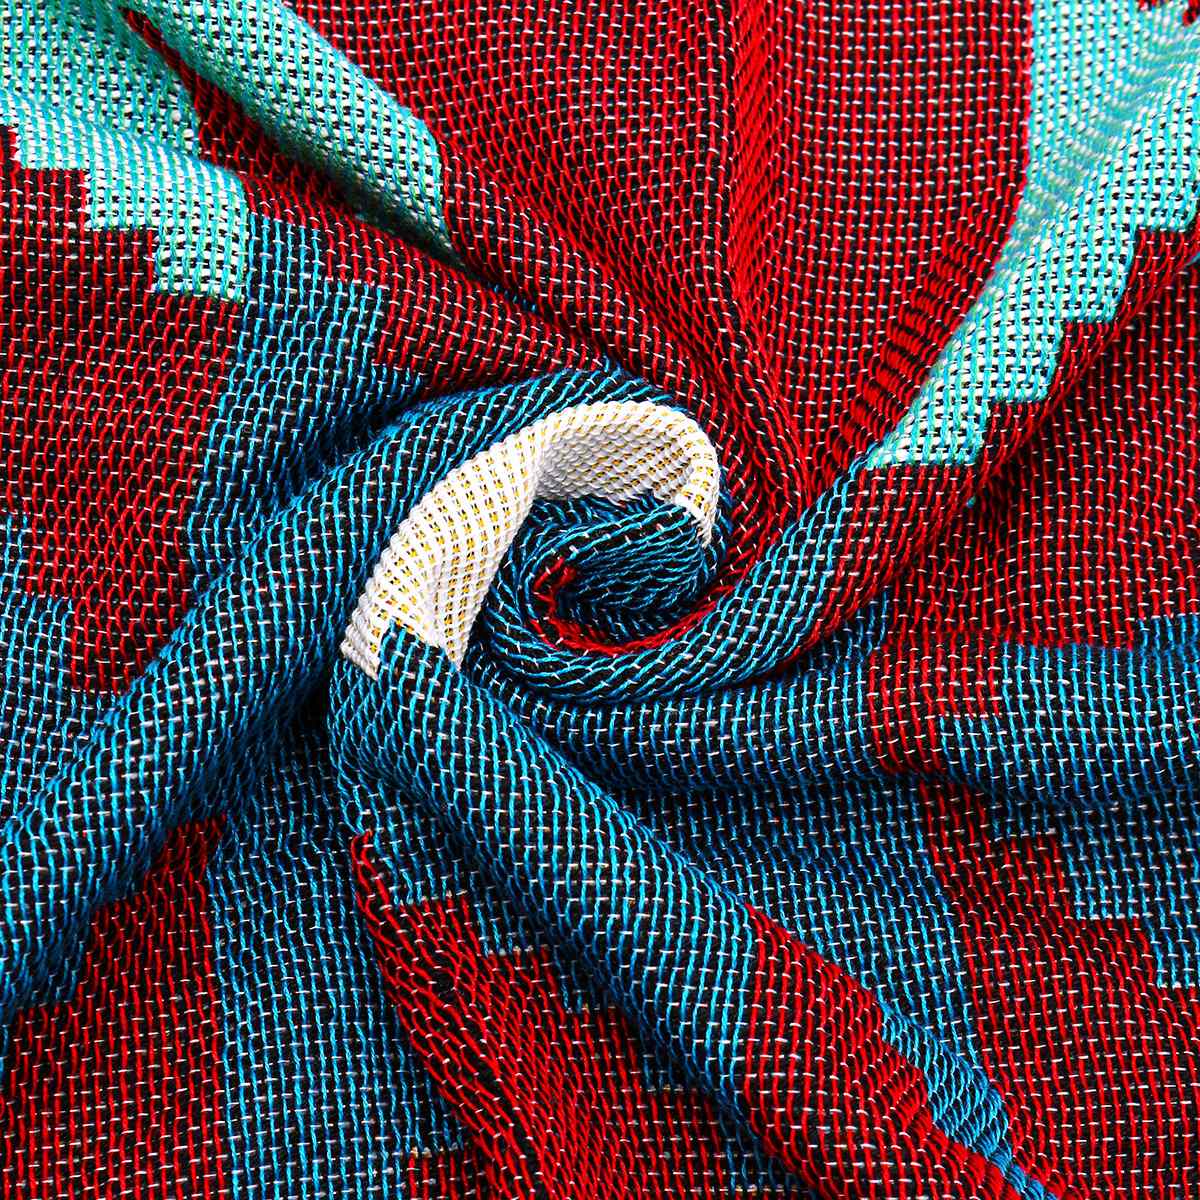 Navajo American-Style Sofa Blanket Tapestry Outdoor Beach Sandy Throw